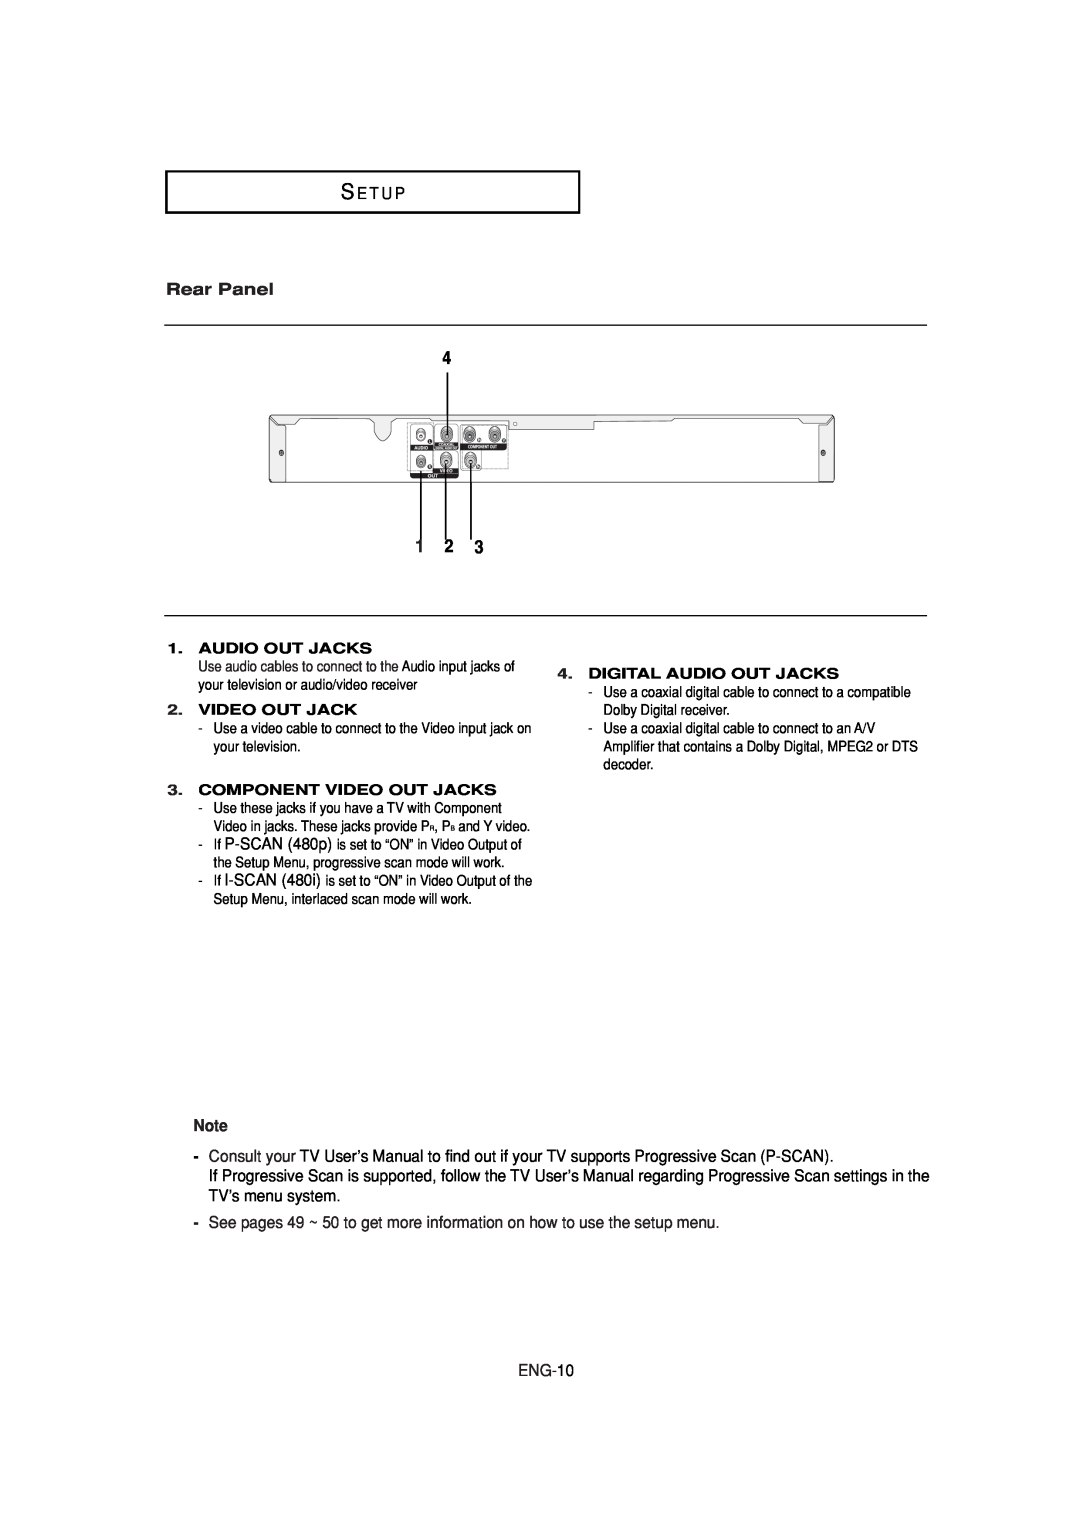 Samsung DVD-P181 manual S E T U P, Rear Panel, ENG-10, Digital Audio Out Jacks, Component Video Out Jacks 